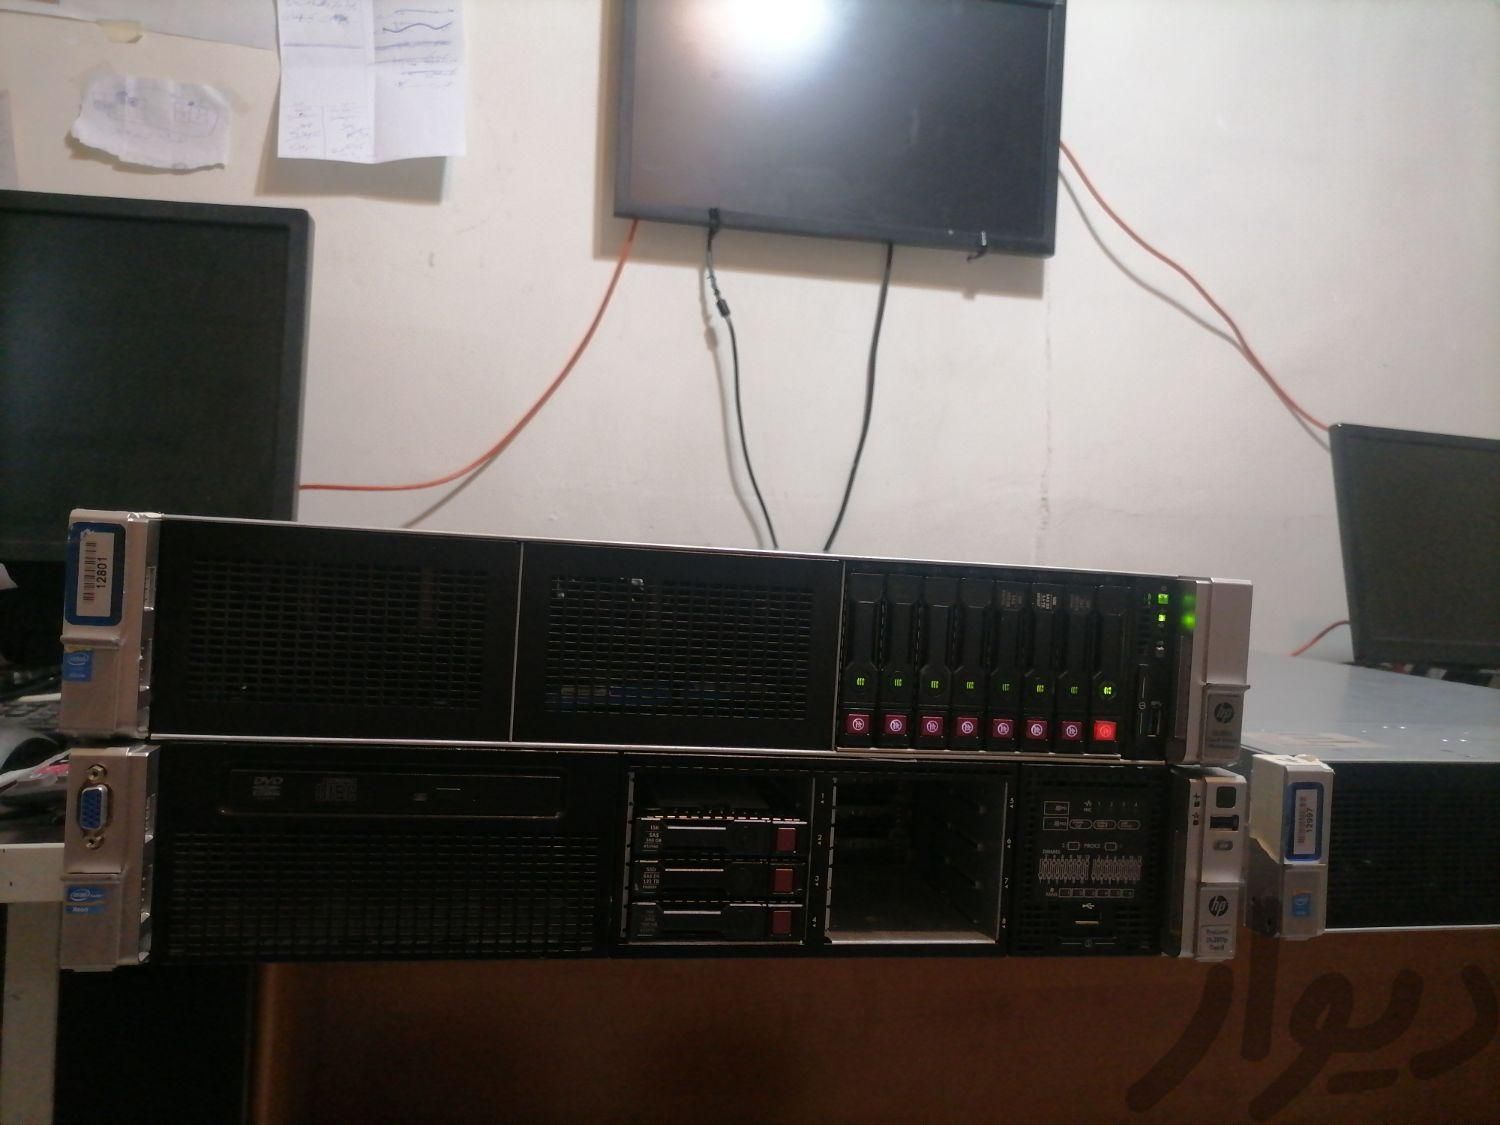 سرور ویپ|مودم و تجهیزات شبکه رایانه|تهران, خواجه نظام الملک|دیوار